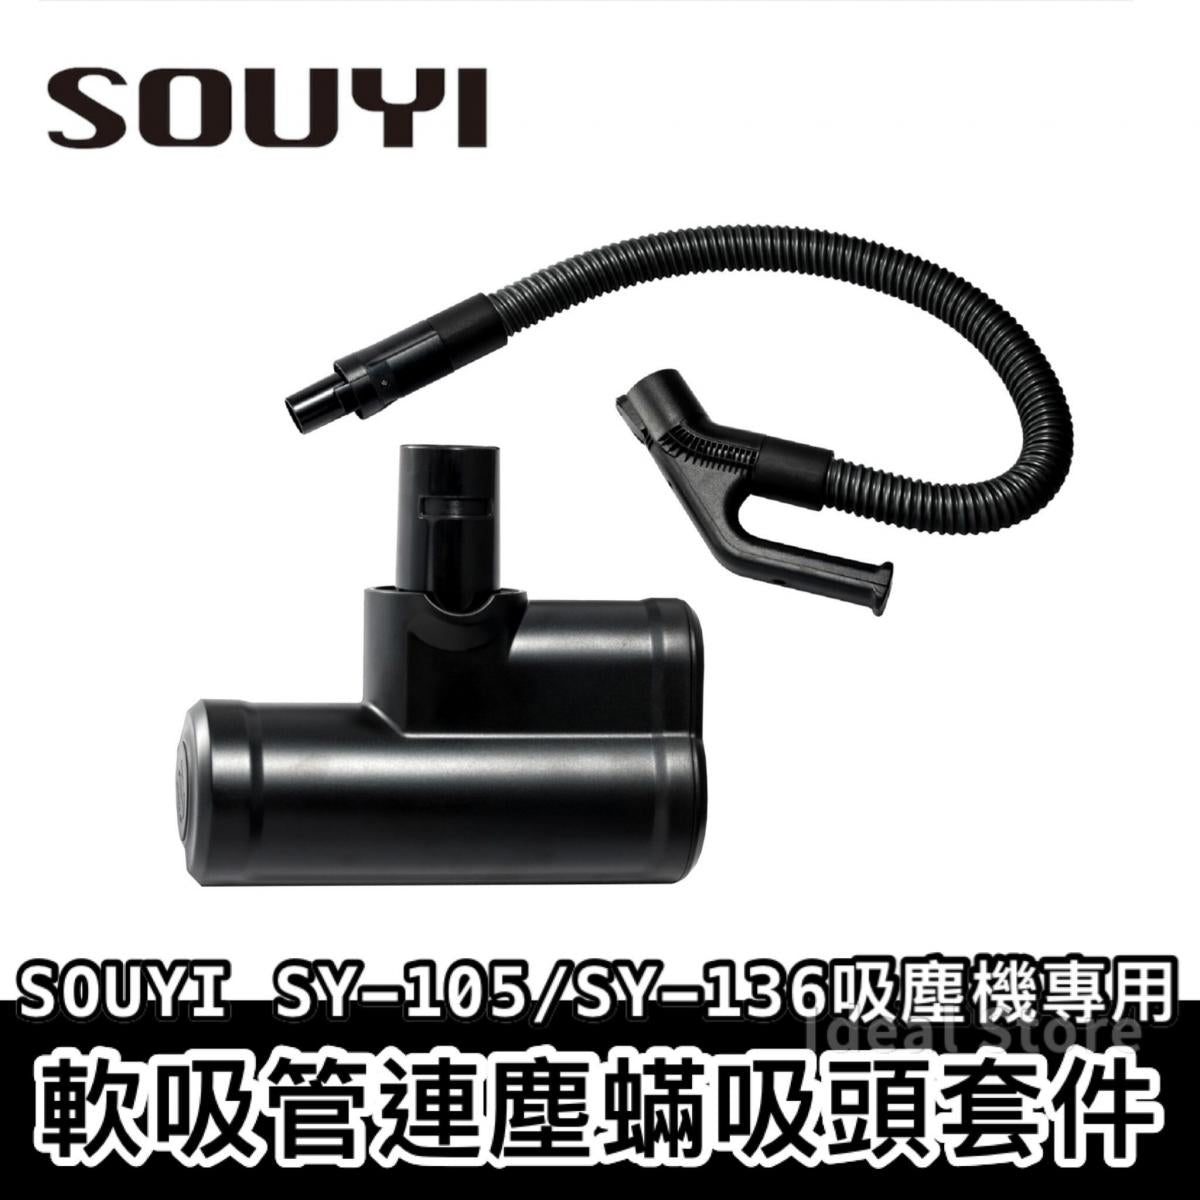 Souyi - 軟吸管連塵蟎吸頭套件 SOUYI SY-105/SY-136 吸塵機專用｜吸塵機配件｜除塵蟎